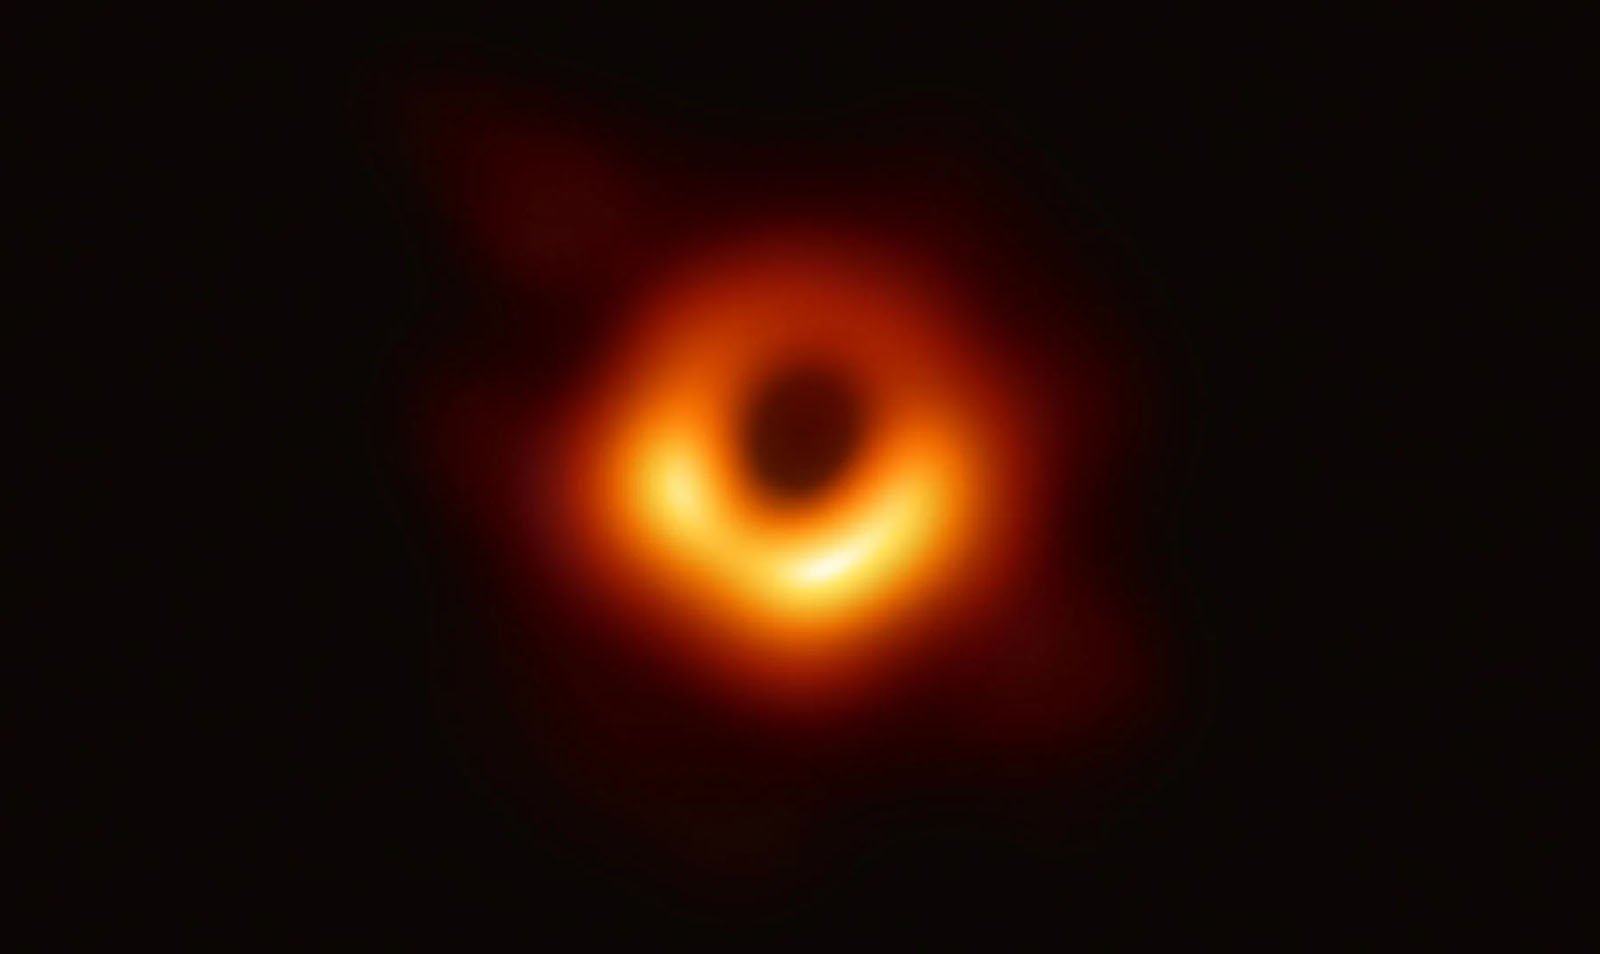 Supermassive black hole M87* is spinning